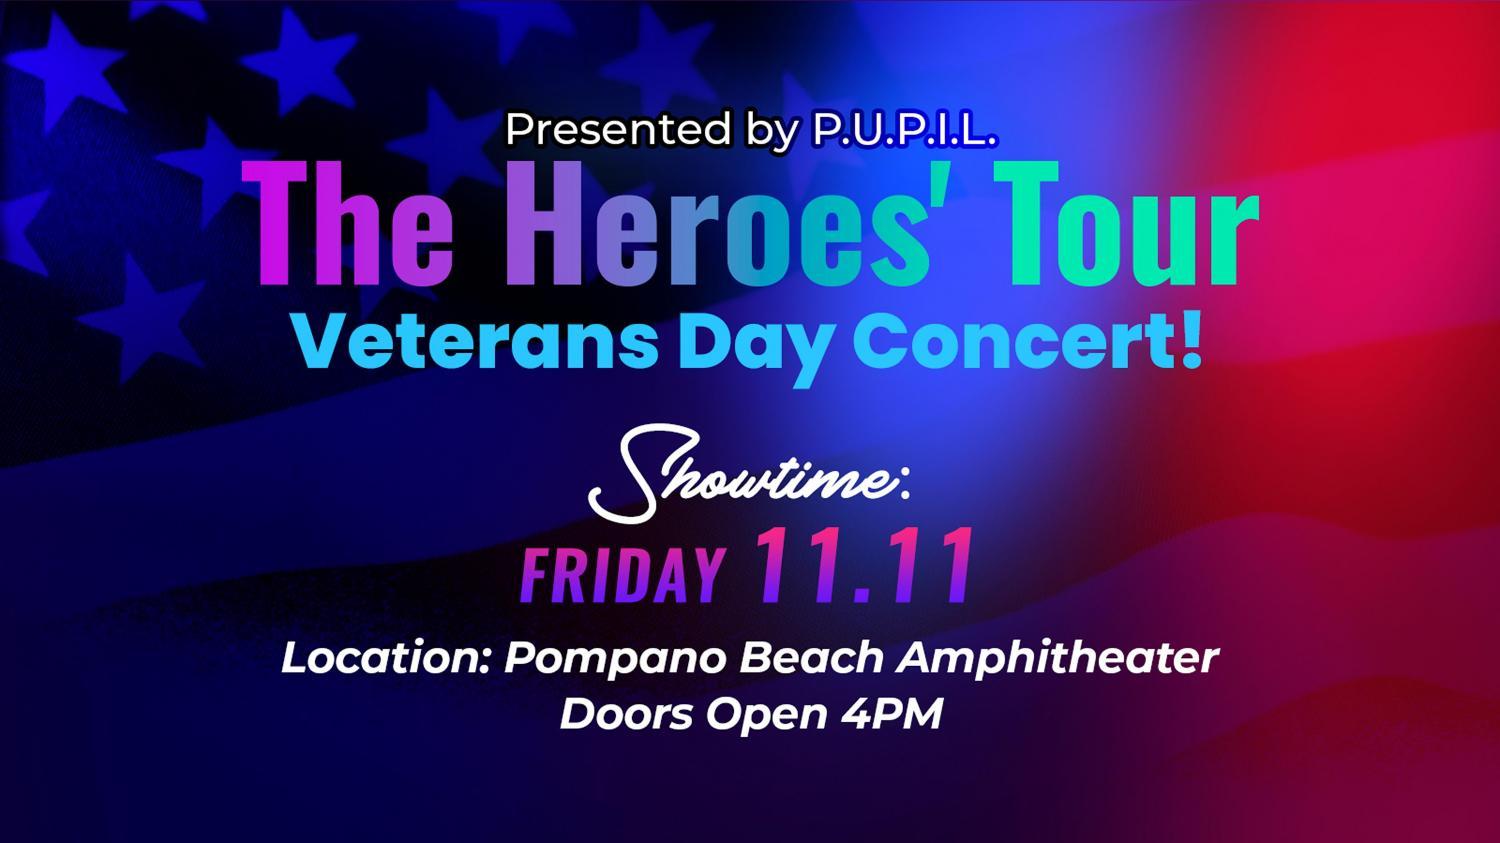 P.U.P.I.L. Presents the Heroes Tour Veterans Day Concert
Fri Nov 11, 7:00 PM - Fri Nov 11, 10:00 PM
in 22 days